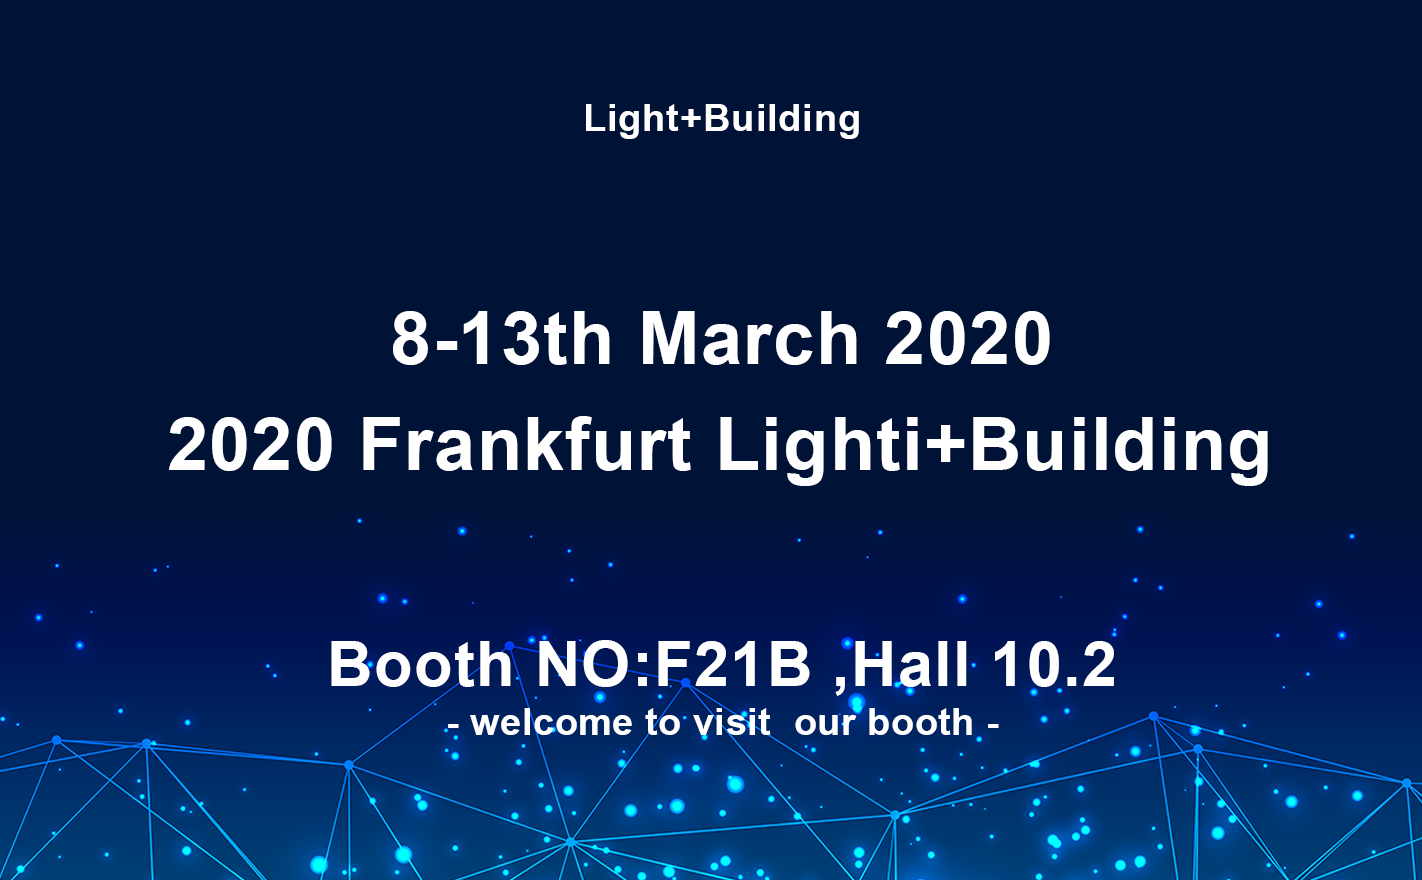 2020 Frankfurt Lighting+Building